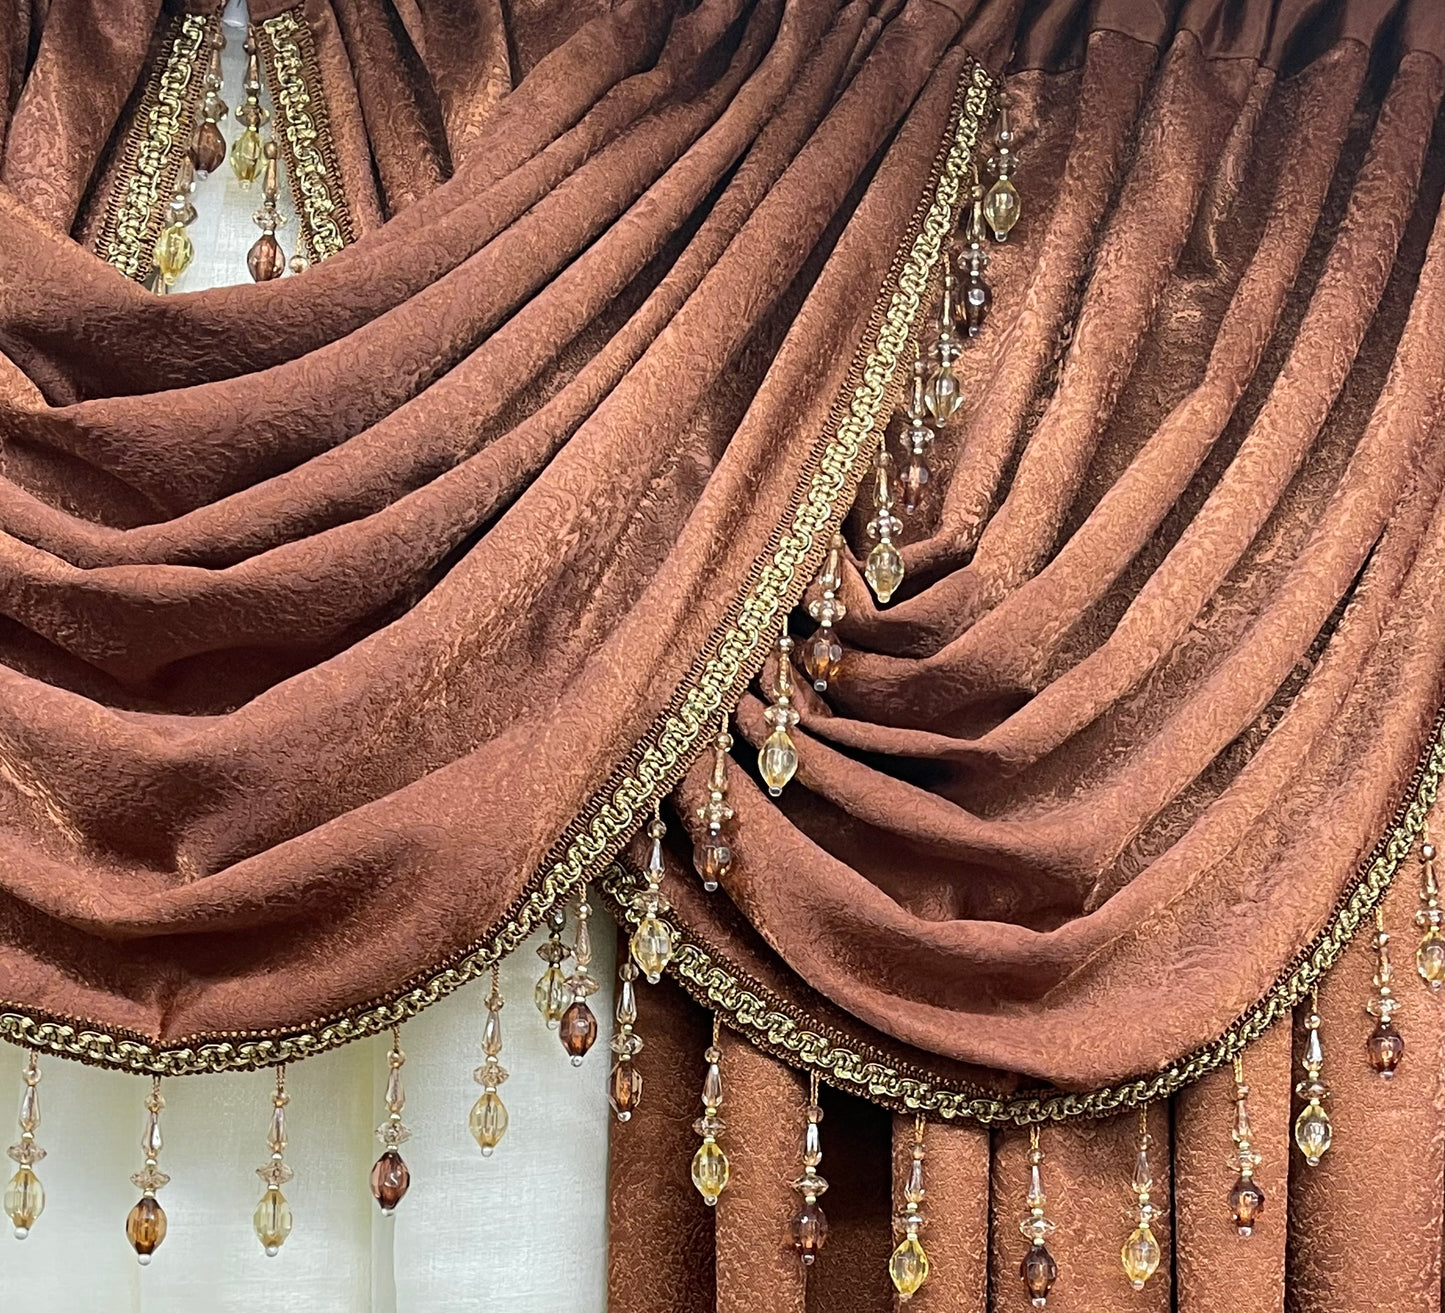 Nisha/monica curtain set